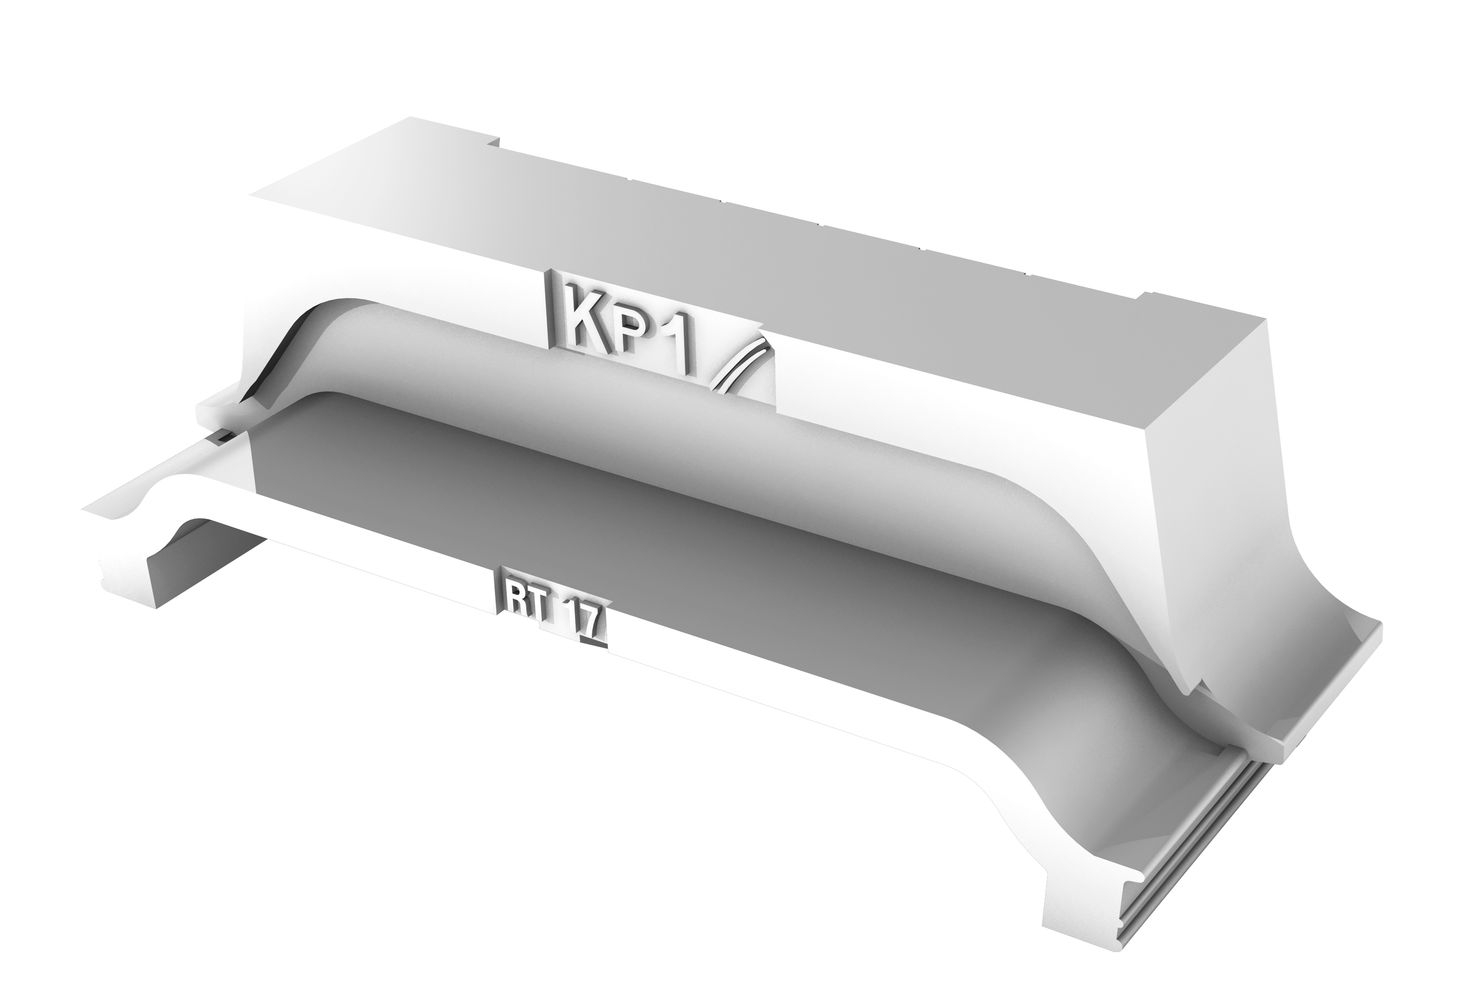 rupteur-thermique-ecorupteur-transversal-db-rt20-0-60m-kp1-0